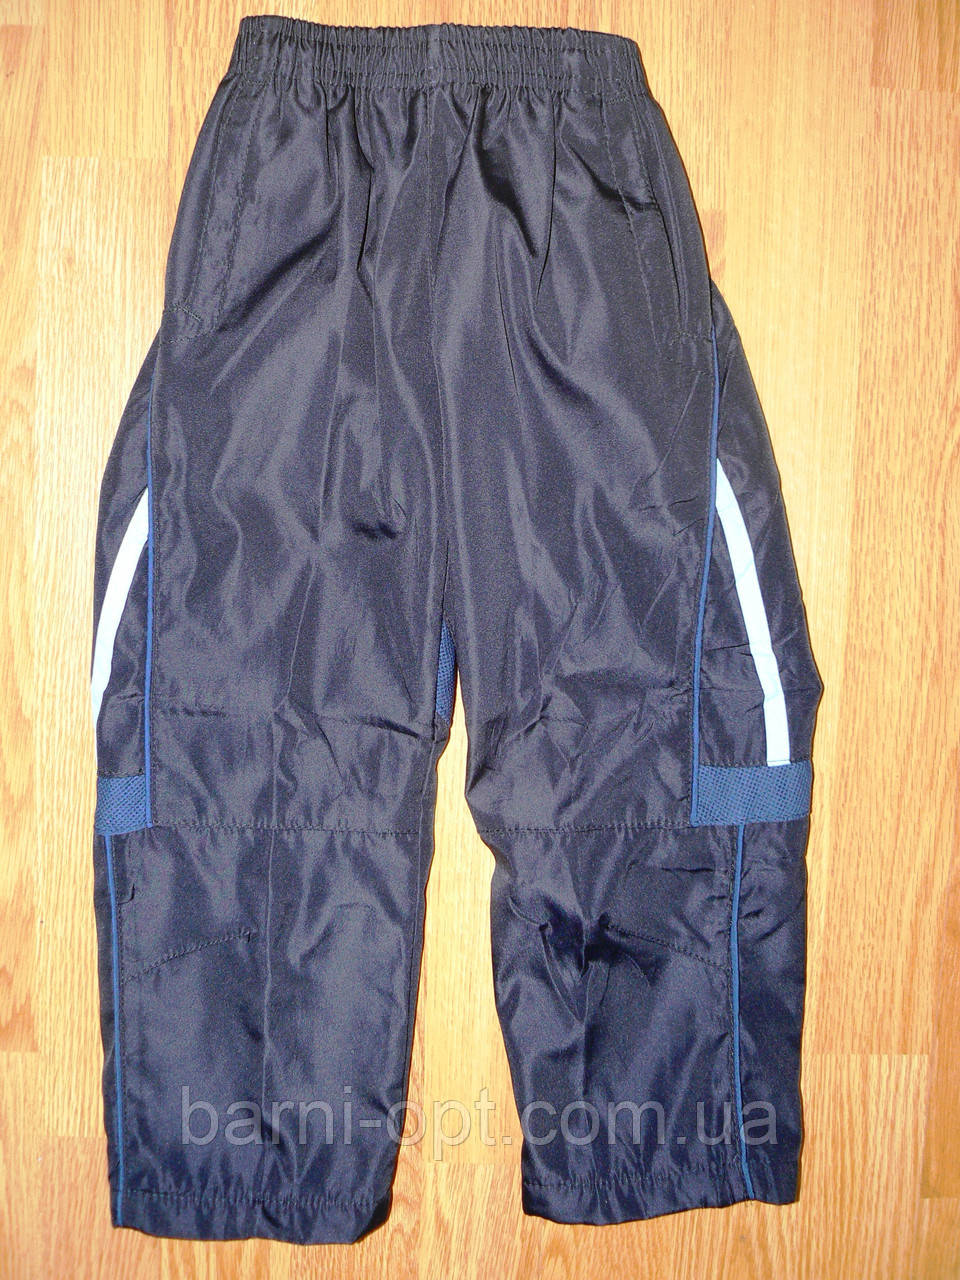 Спортивні штани на хлопчика, Aoles, 98 рр